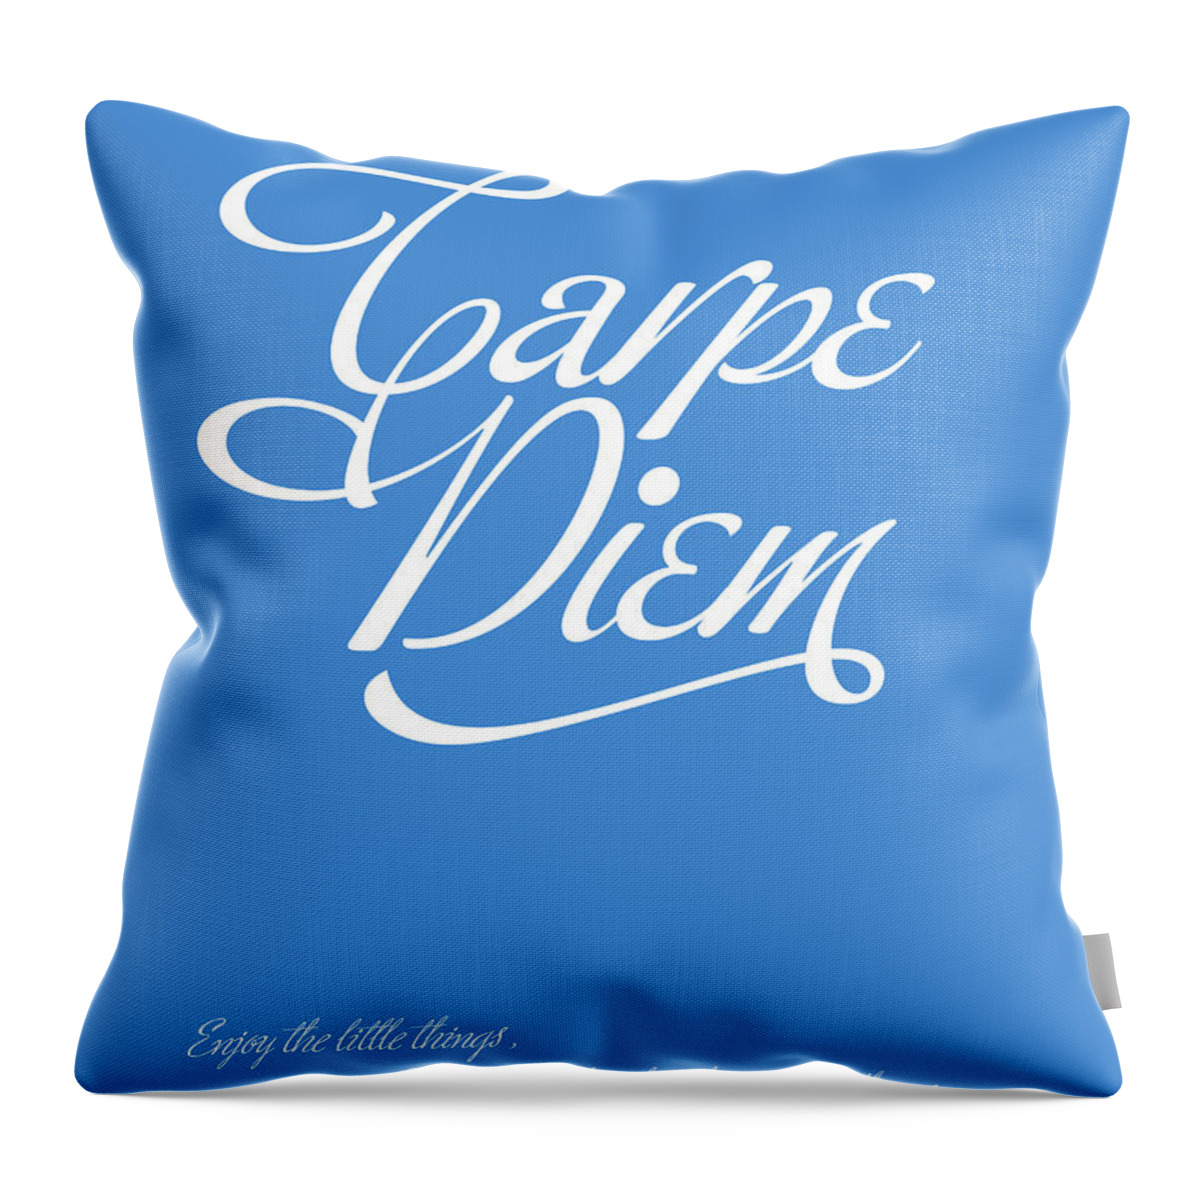 Carpe Throw Pillow featuring the digital art Carpe Diem by Gina Dsgn